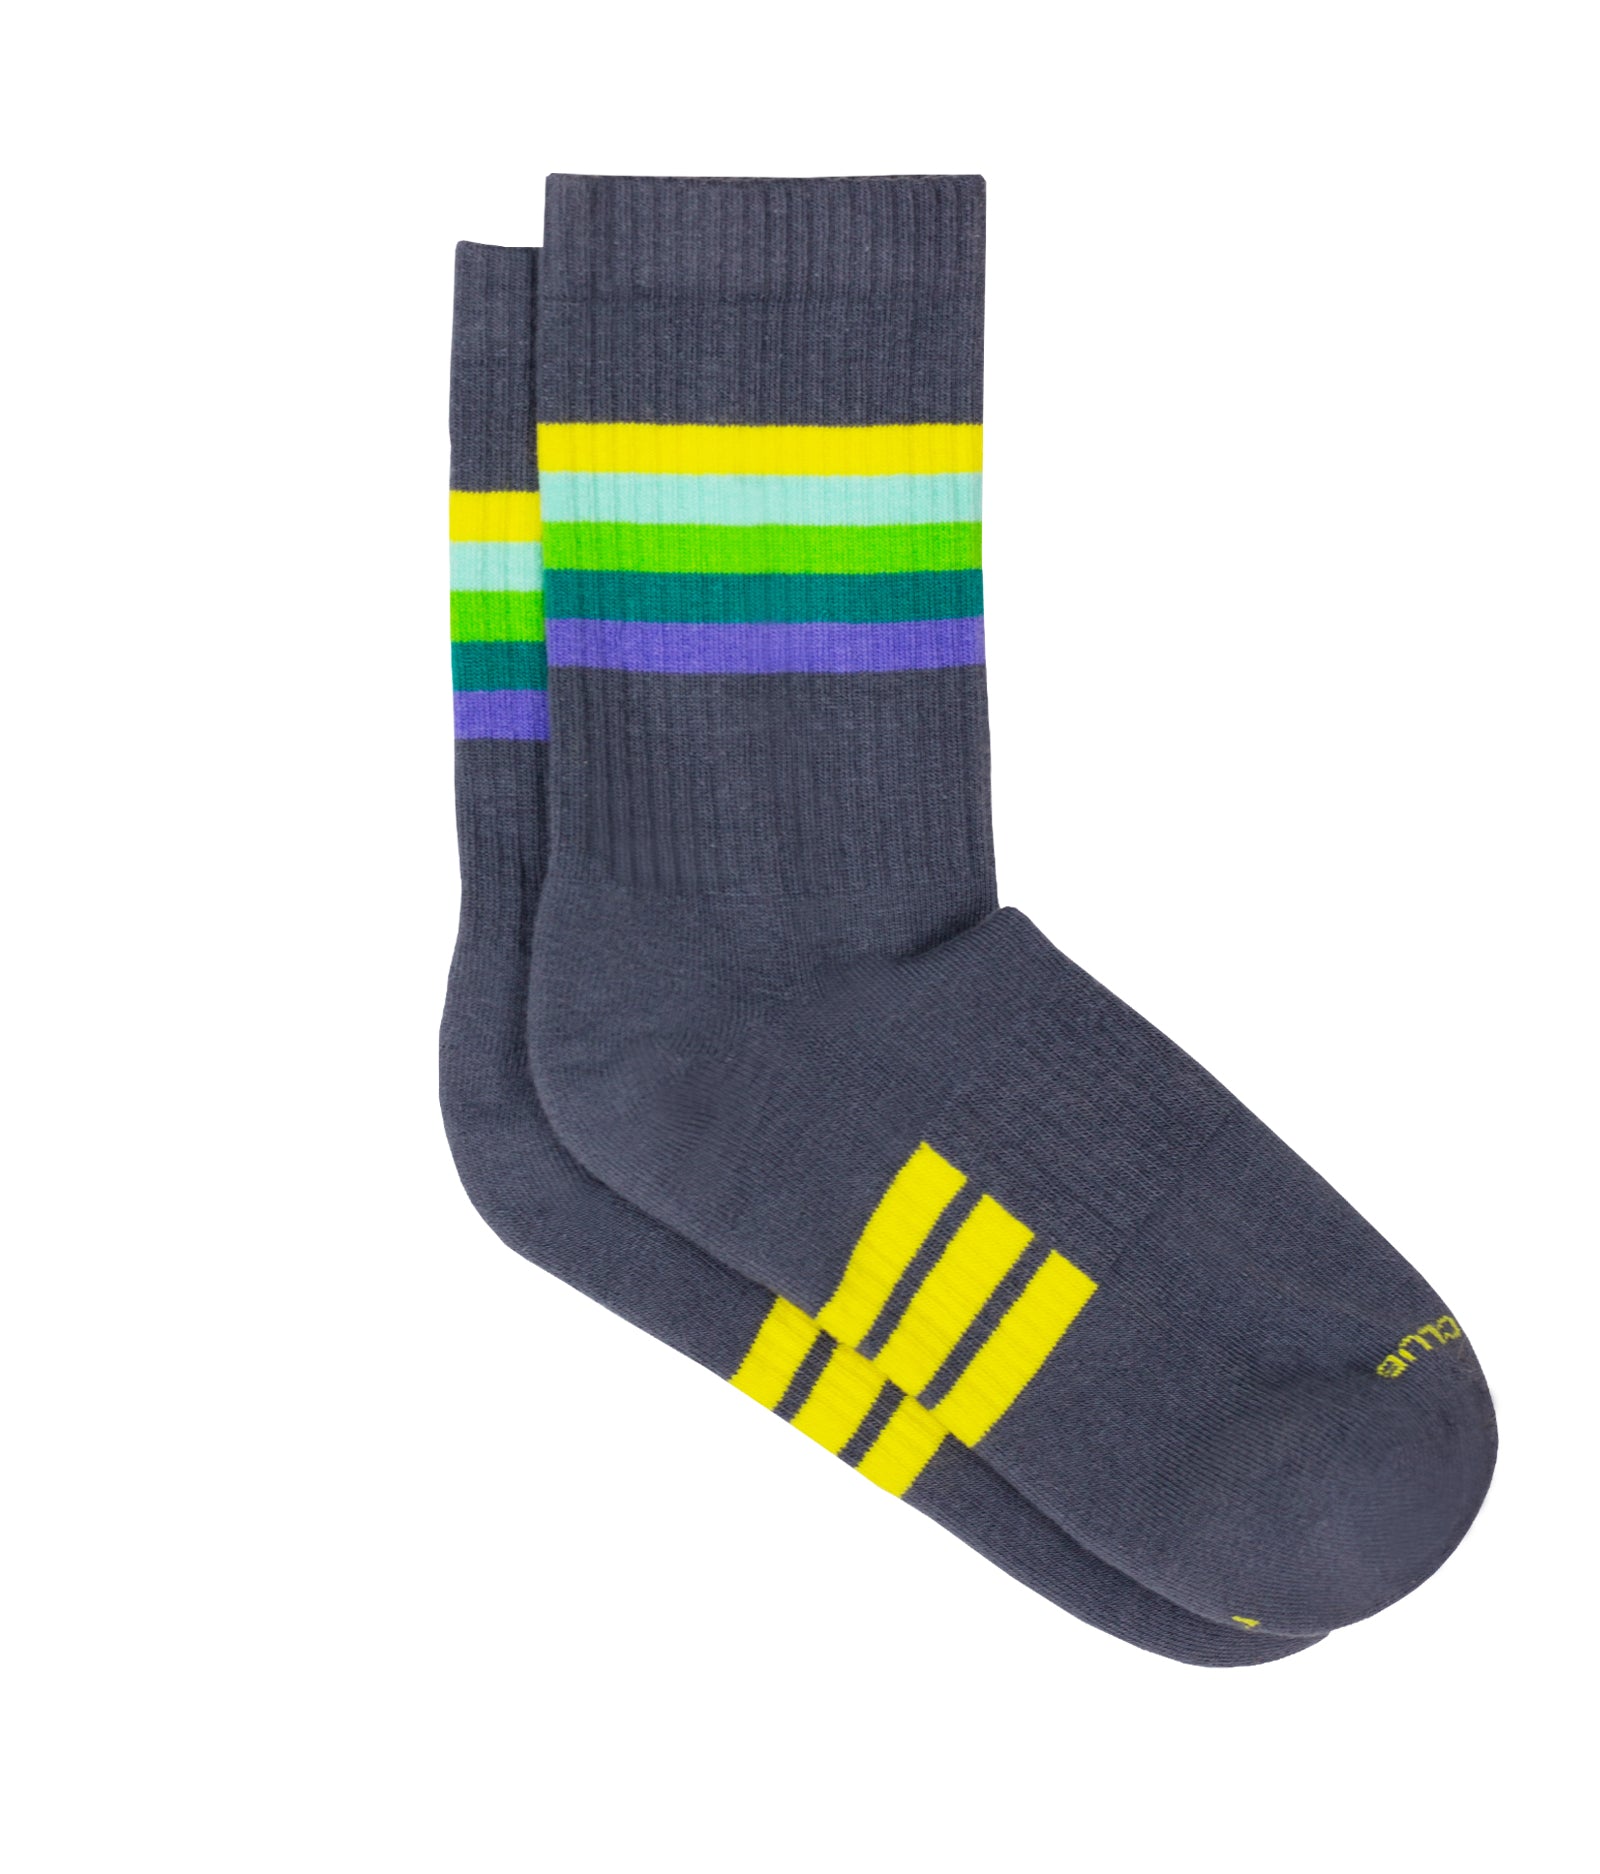 The Allen sock in the concrete (dark grey) color variation.